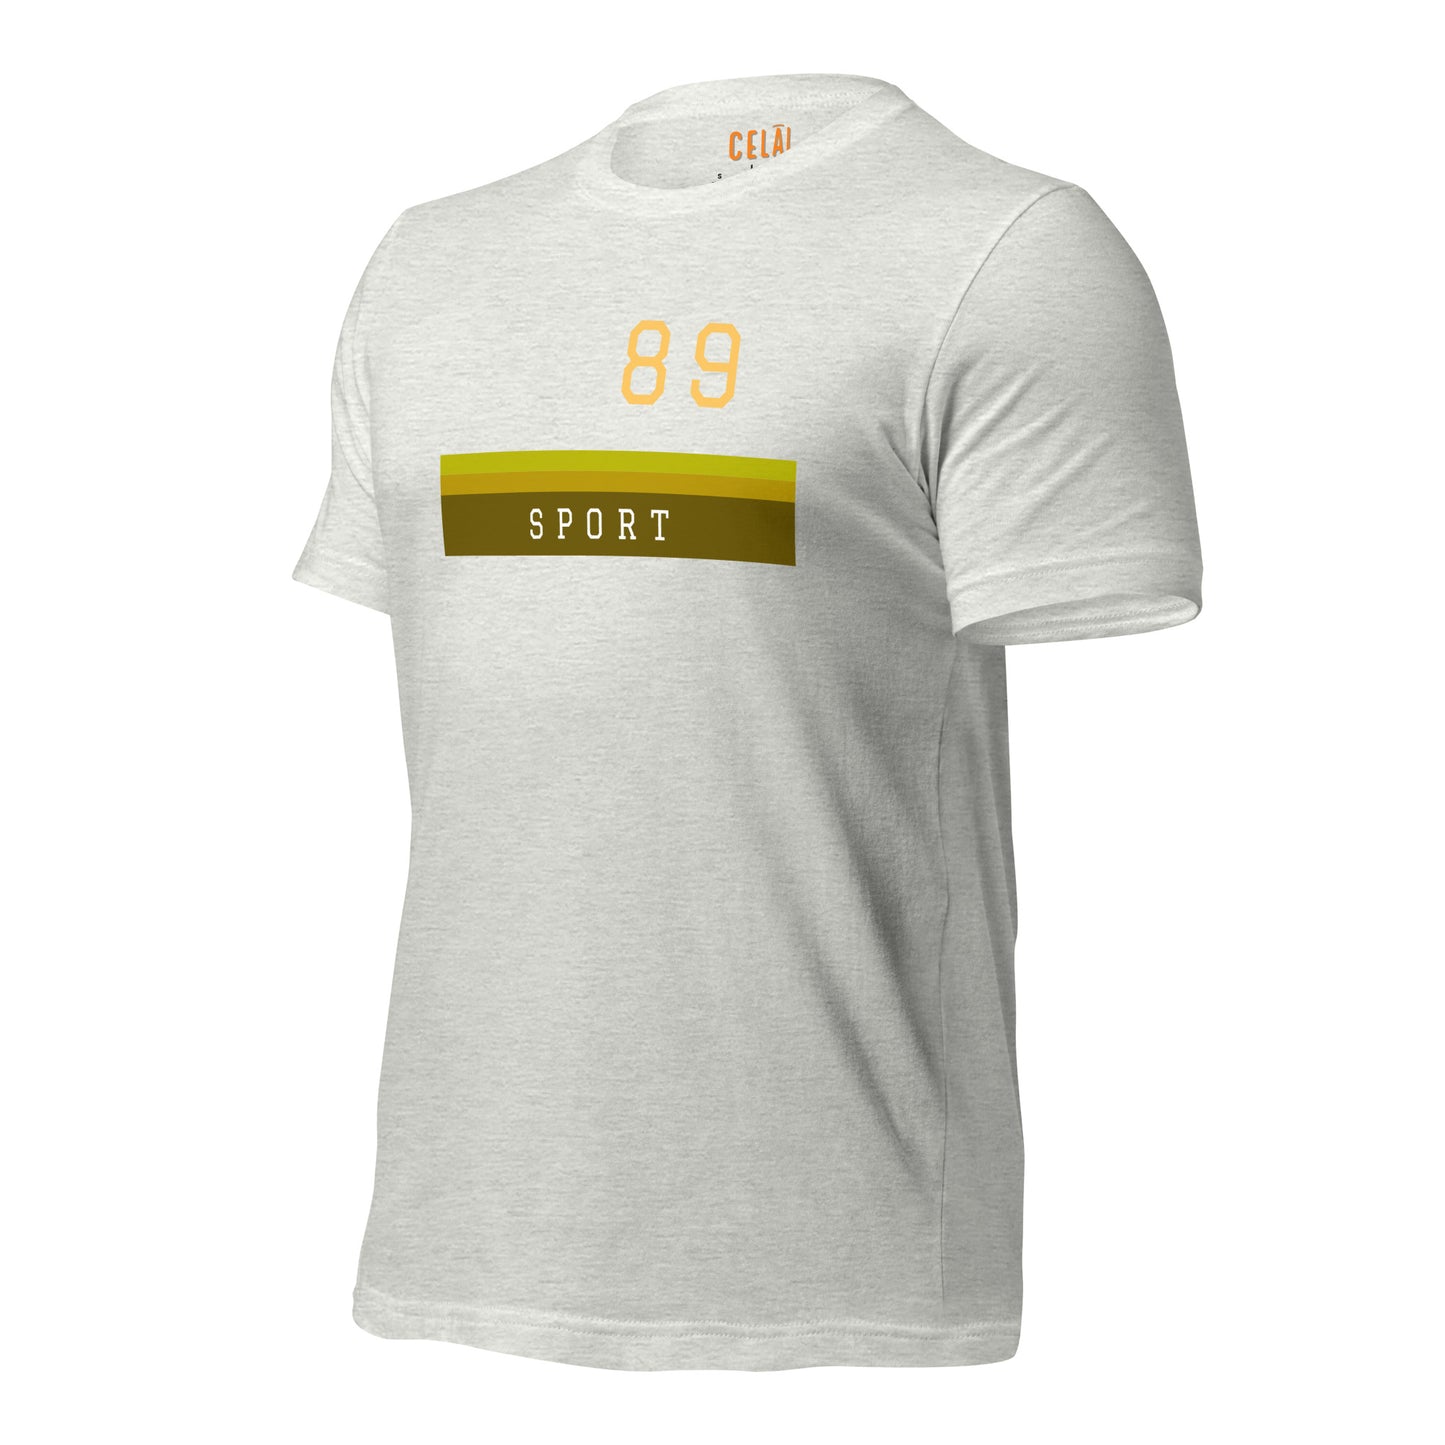 89 Unisex t-shirt